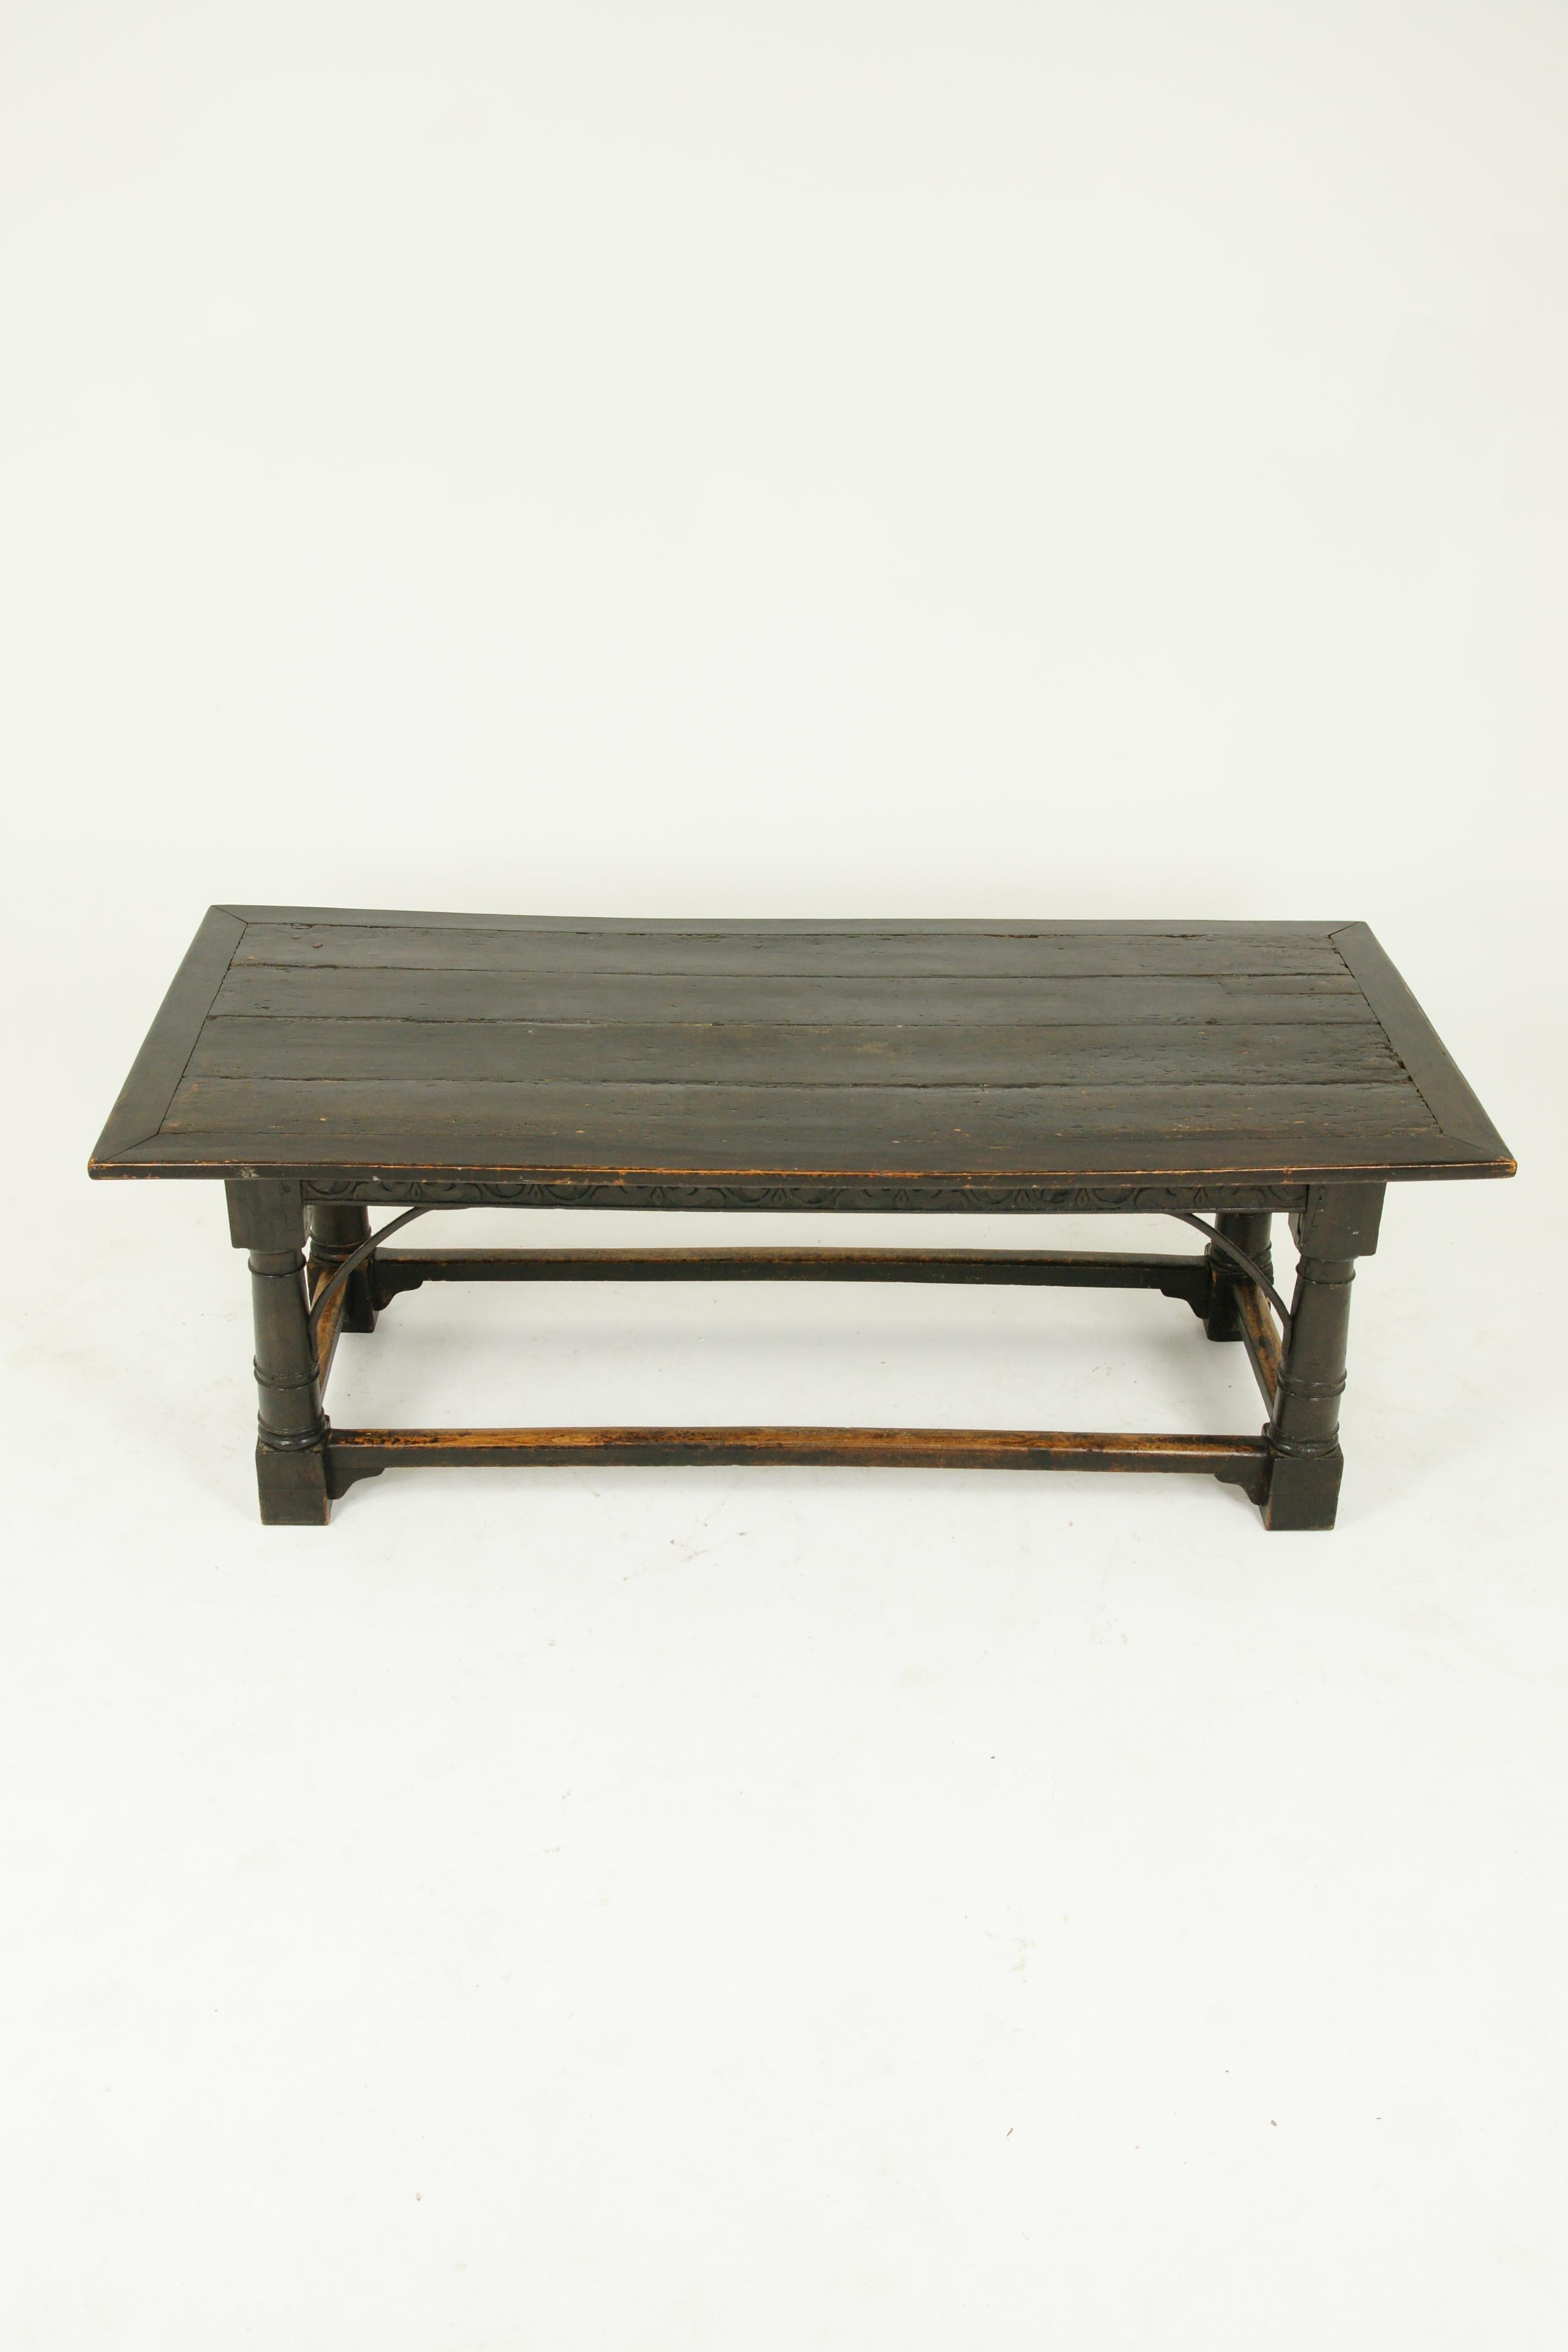 Scottish Antique Oak Table, Refectory Table, Scotland 1780, Antique Furniture, B1543